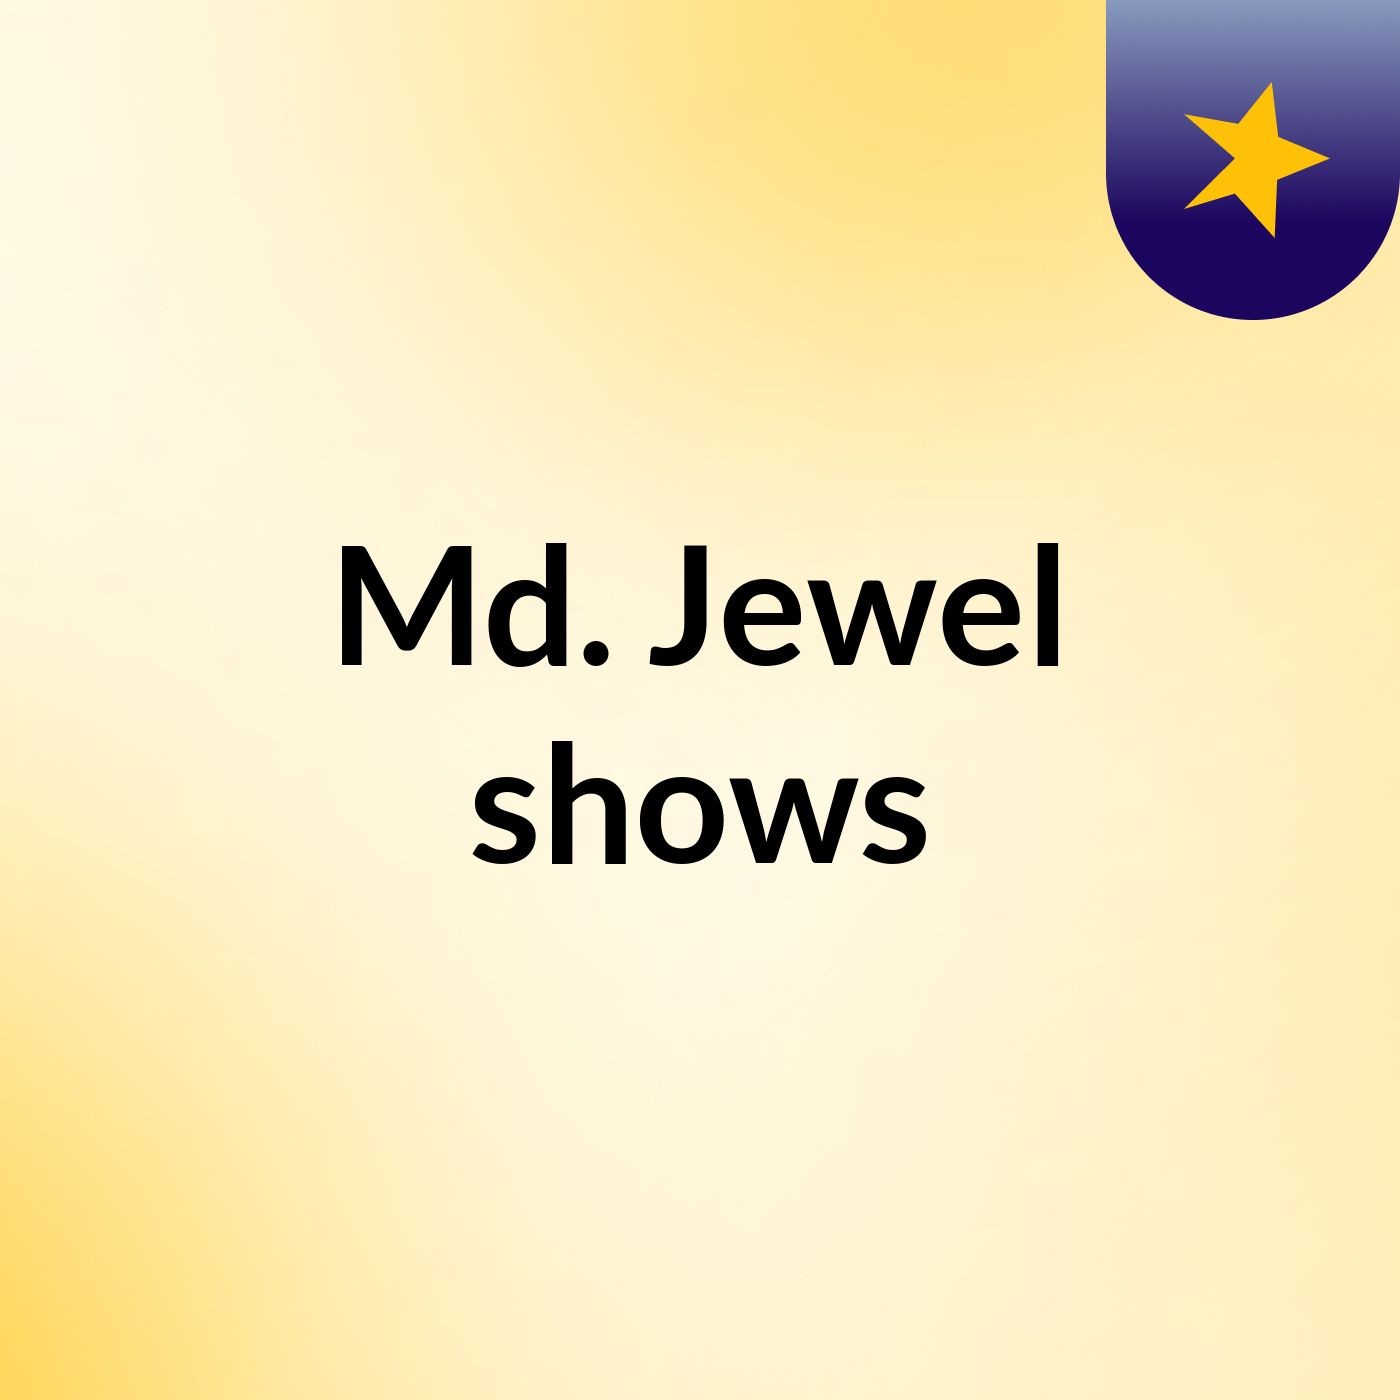 Md. Jewel shows